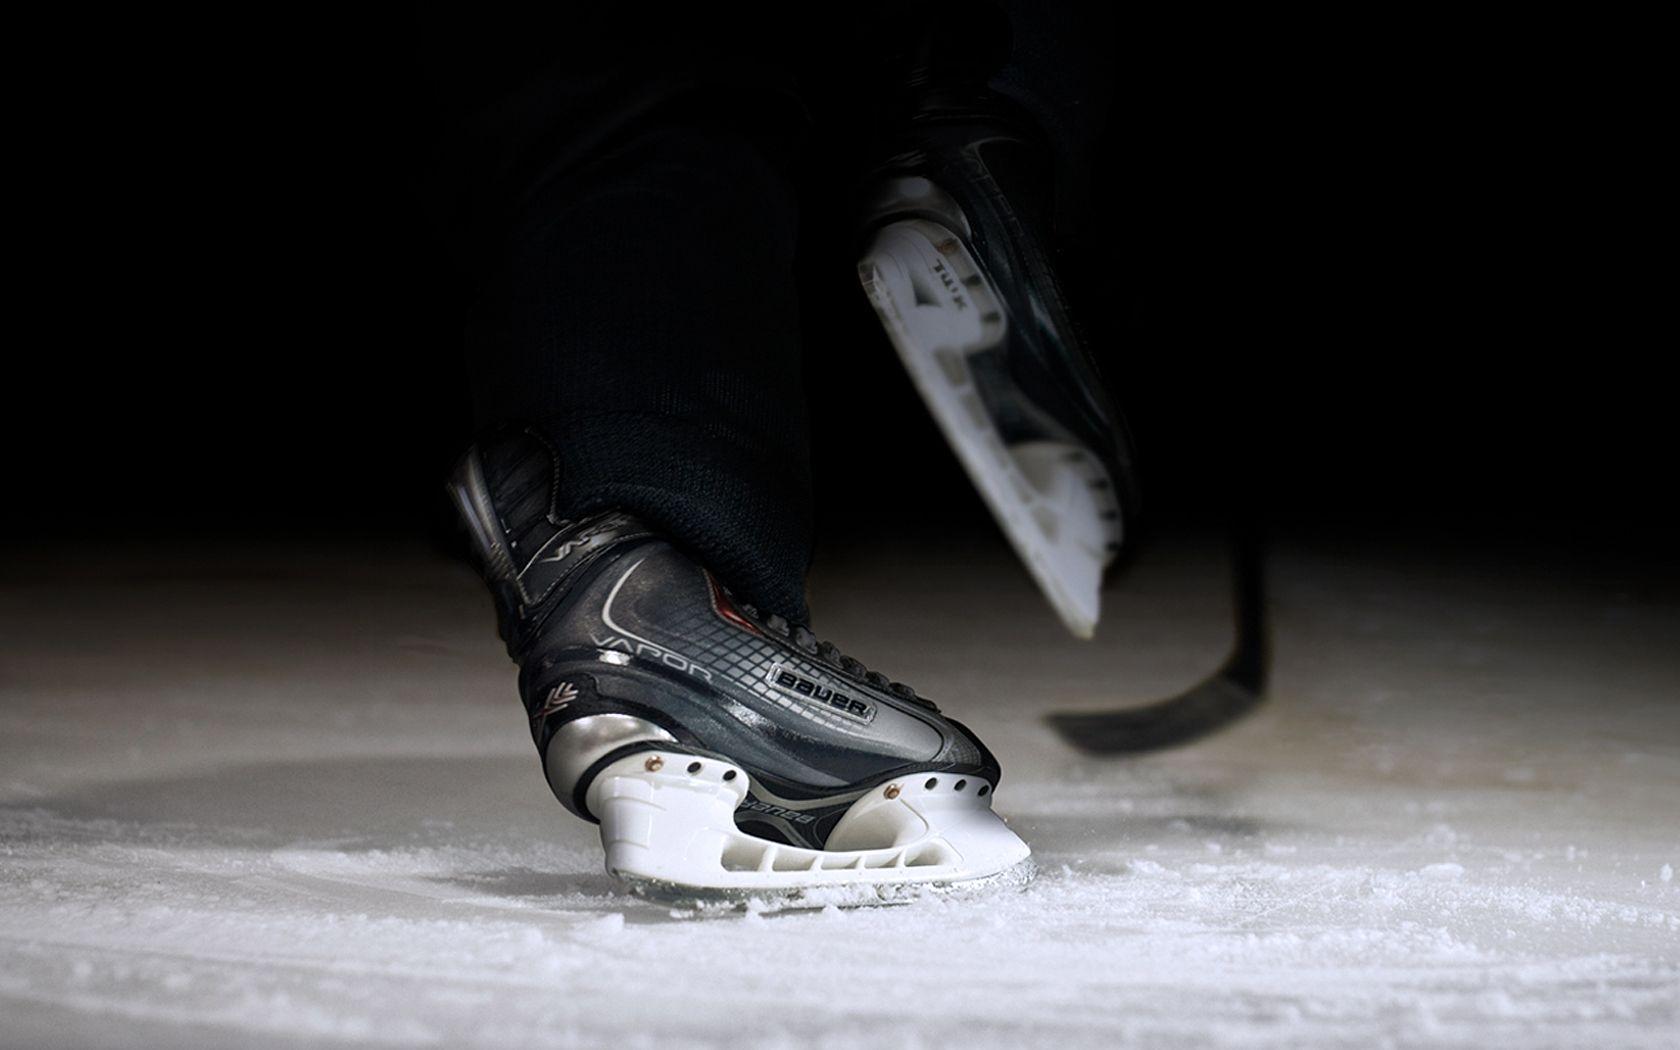 Bauer On The Ice. Score. Ice hockey, Hockey stuff